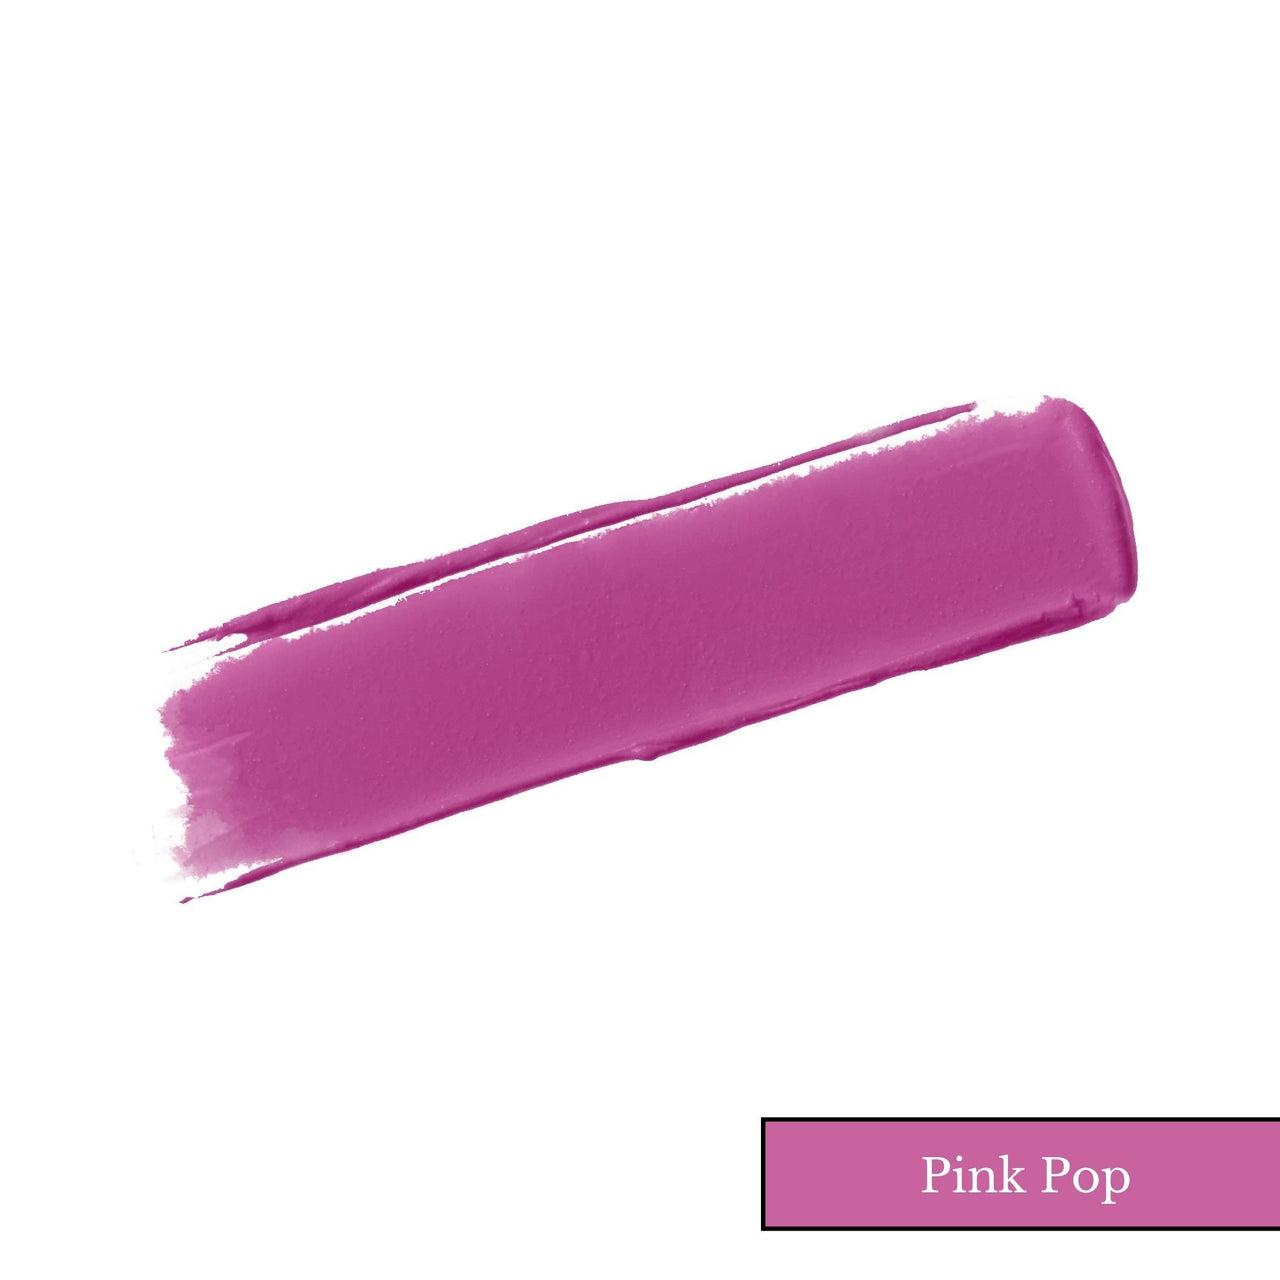 Pink Pop